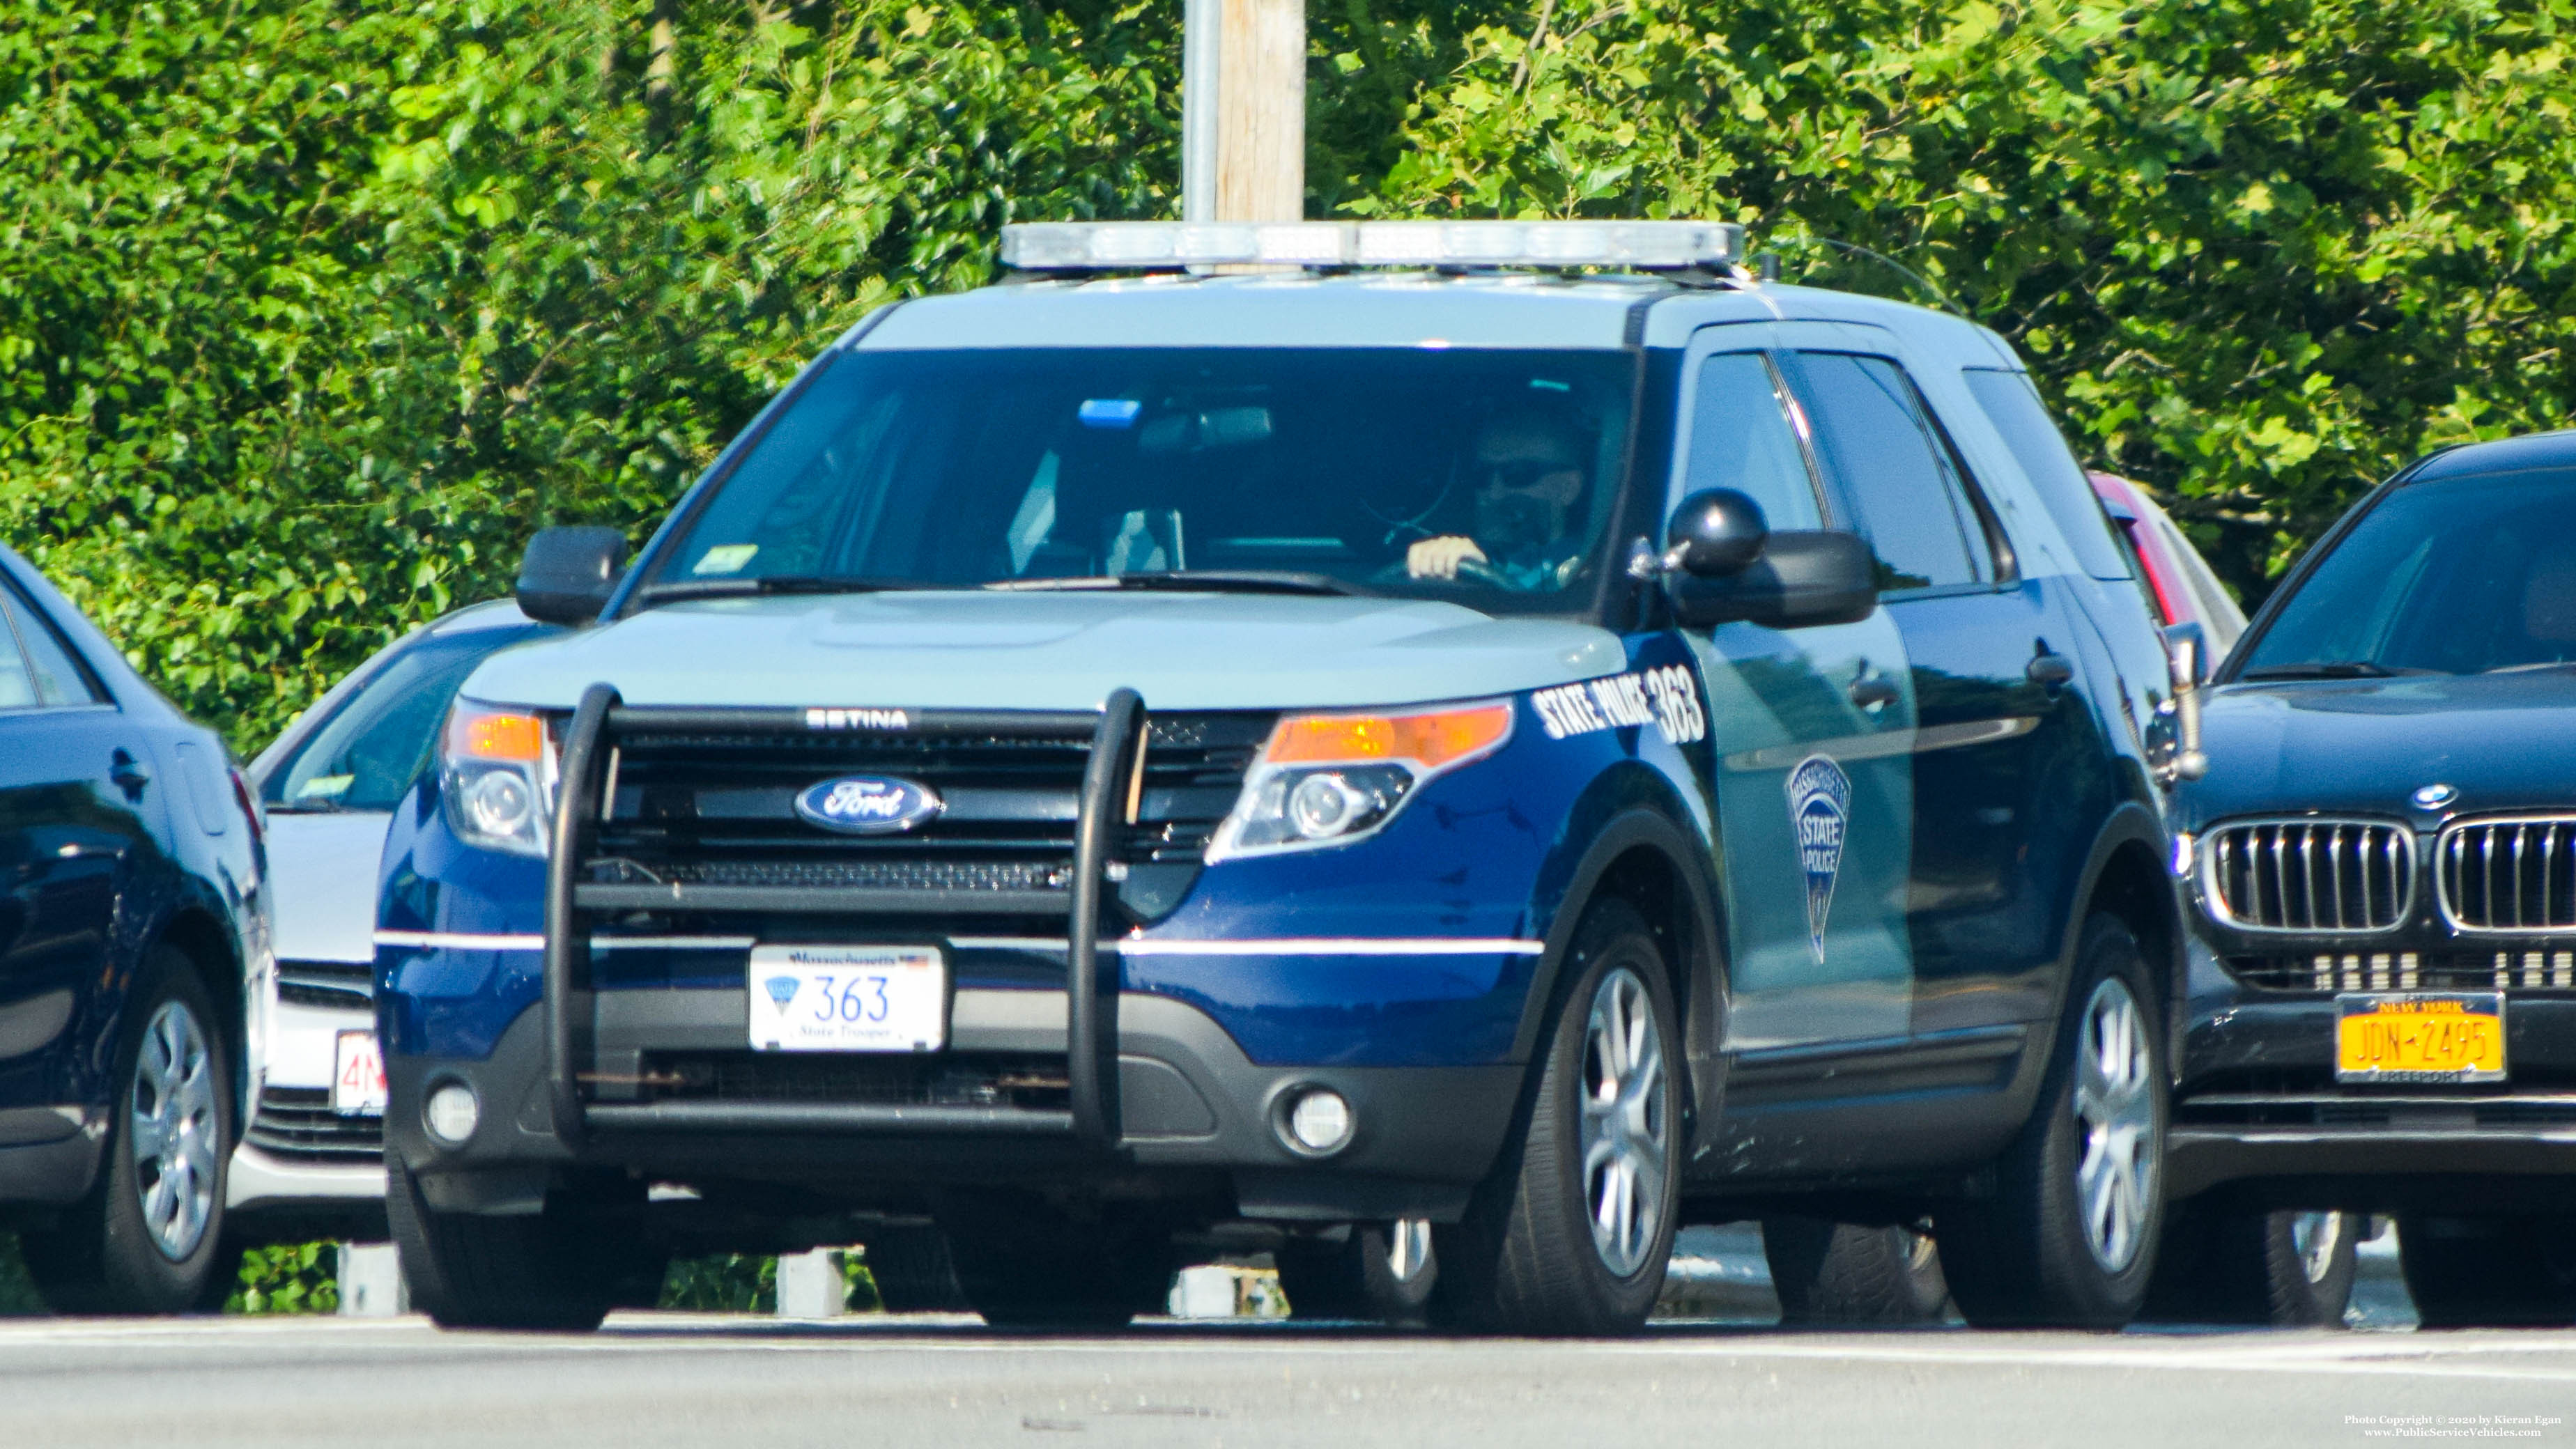 A photo  of Massachusetts State Police
            Cruiser 363, a 2015 Ford Police Interceptor Utility             taken by Kieran Egan